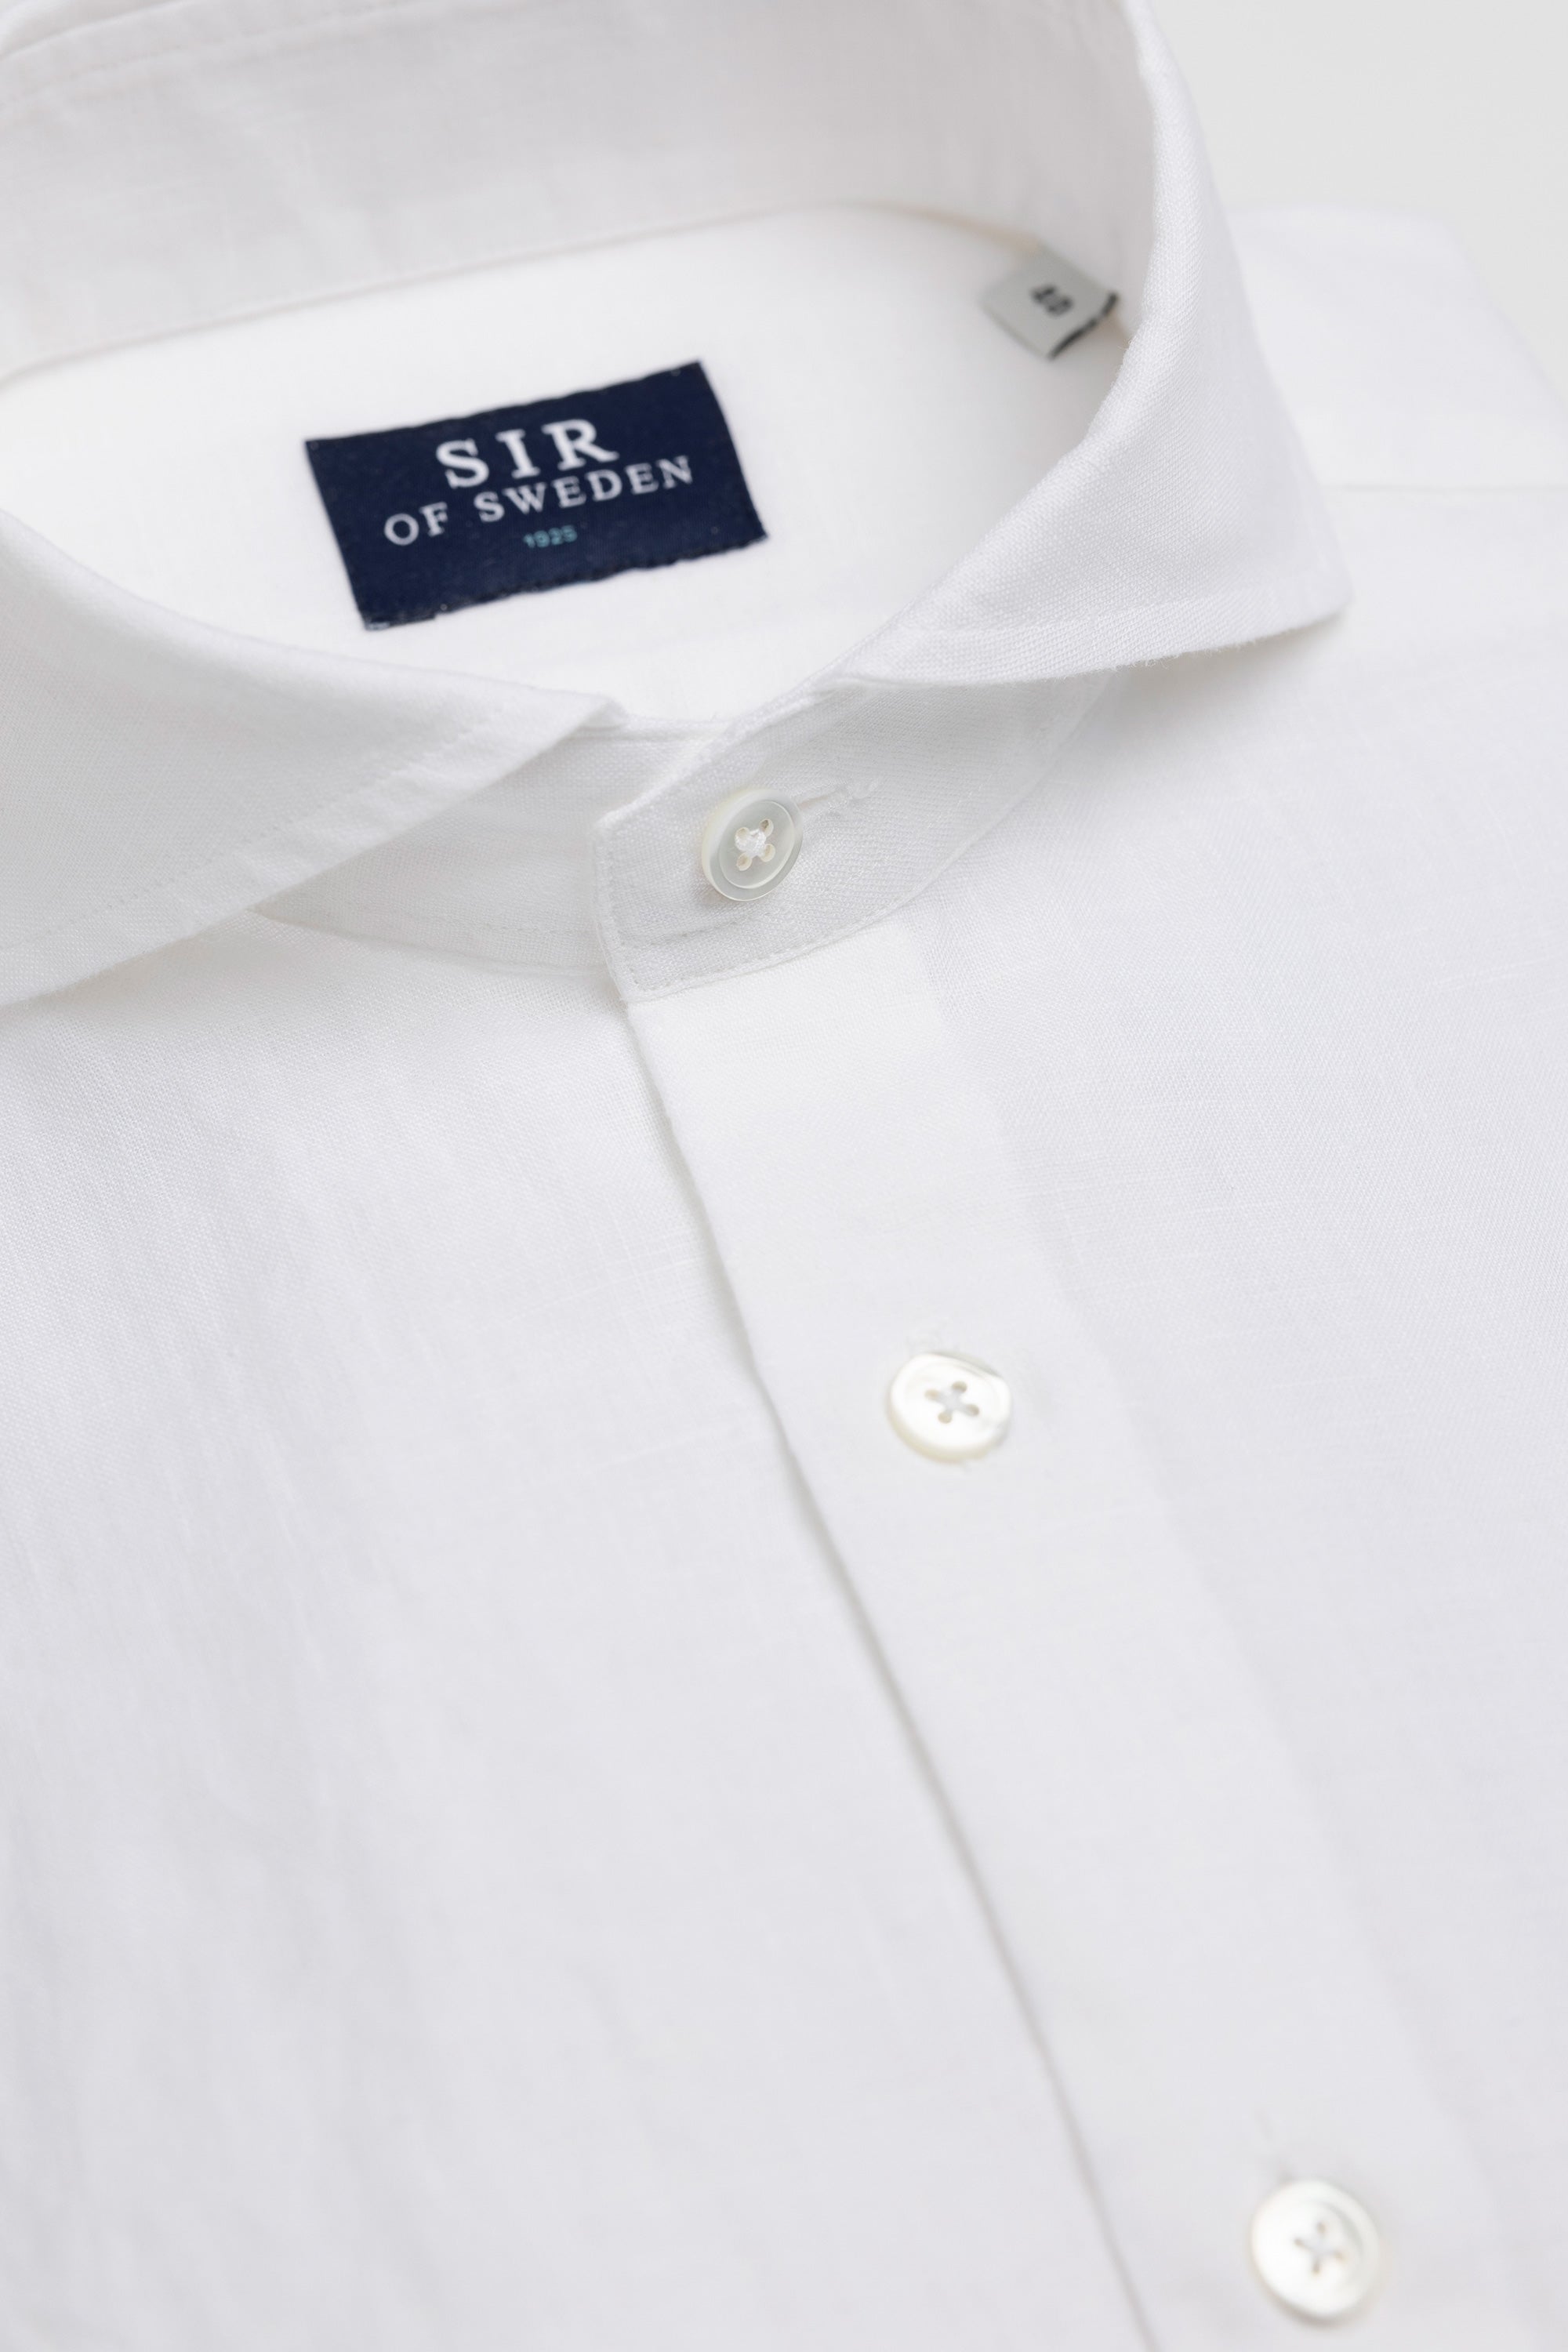 Agnelli White Linen Shirt